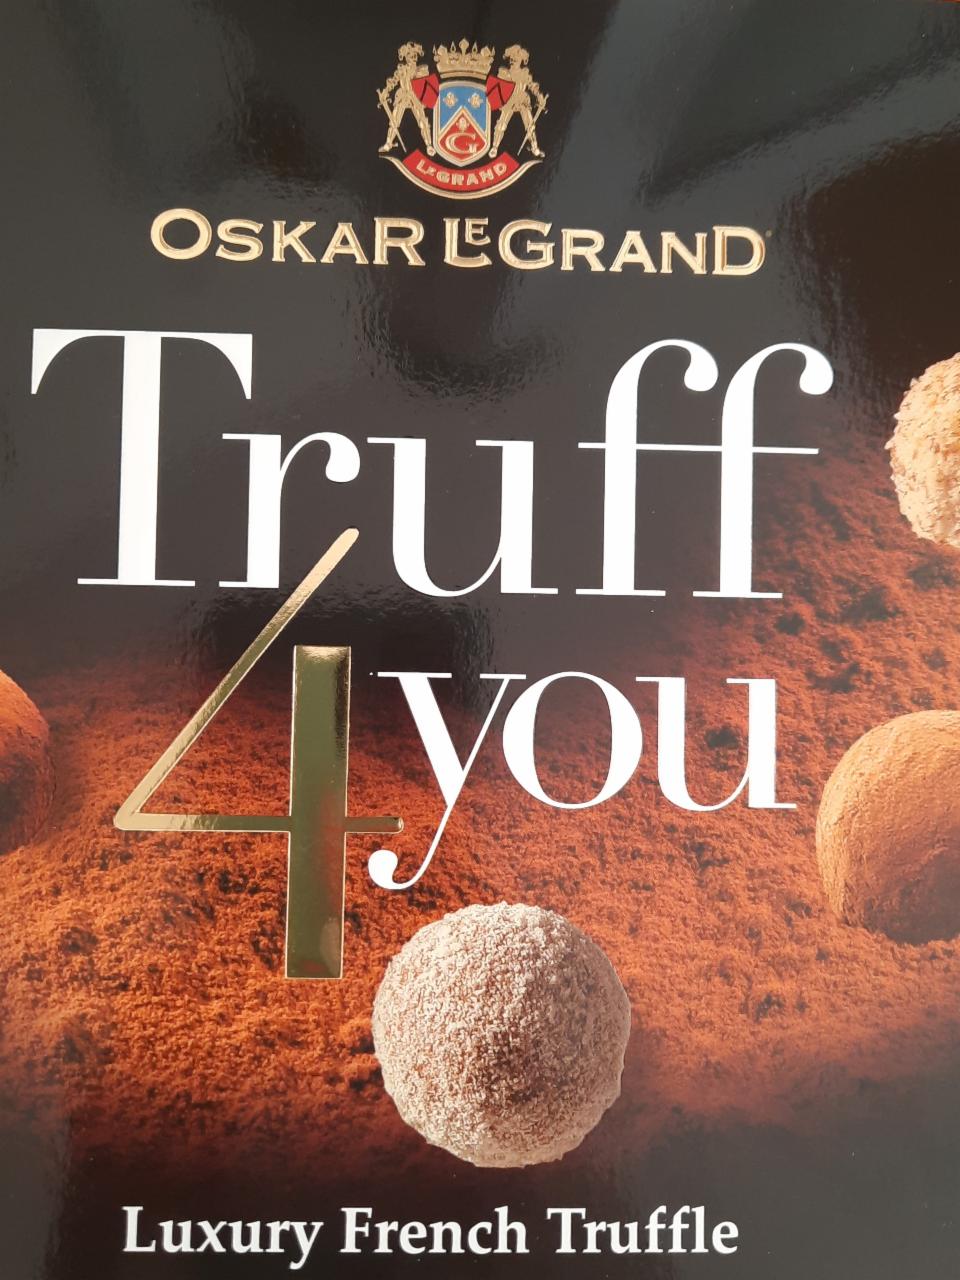 Fotografie - Truff 4 you Oskar le Grand